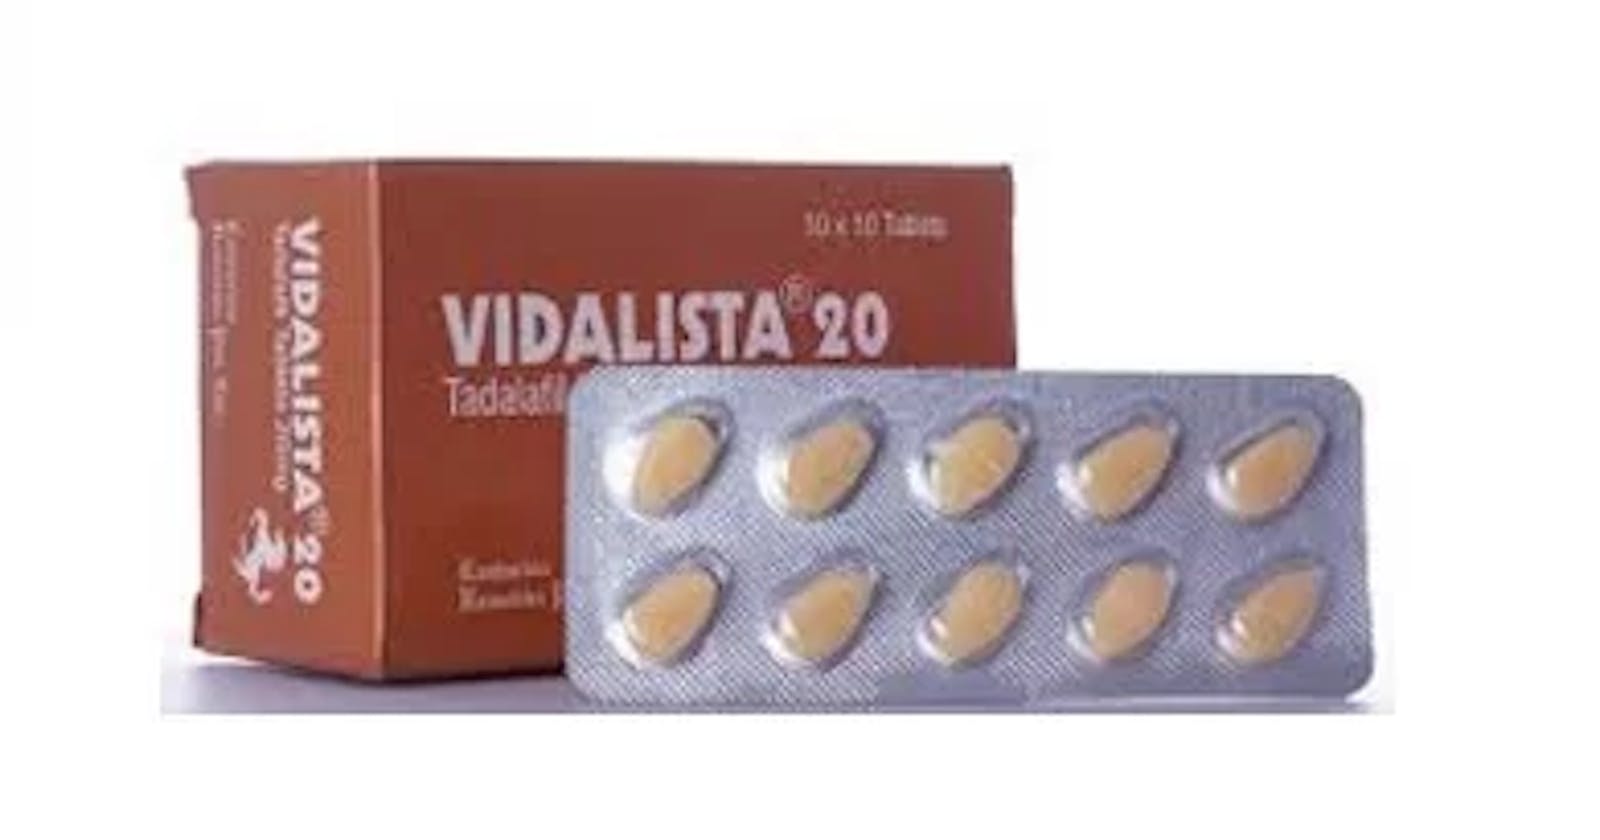 Vidalista 20mg - The Key to a Fulfilling Love Life ❤️